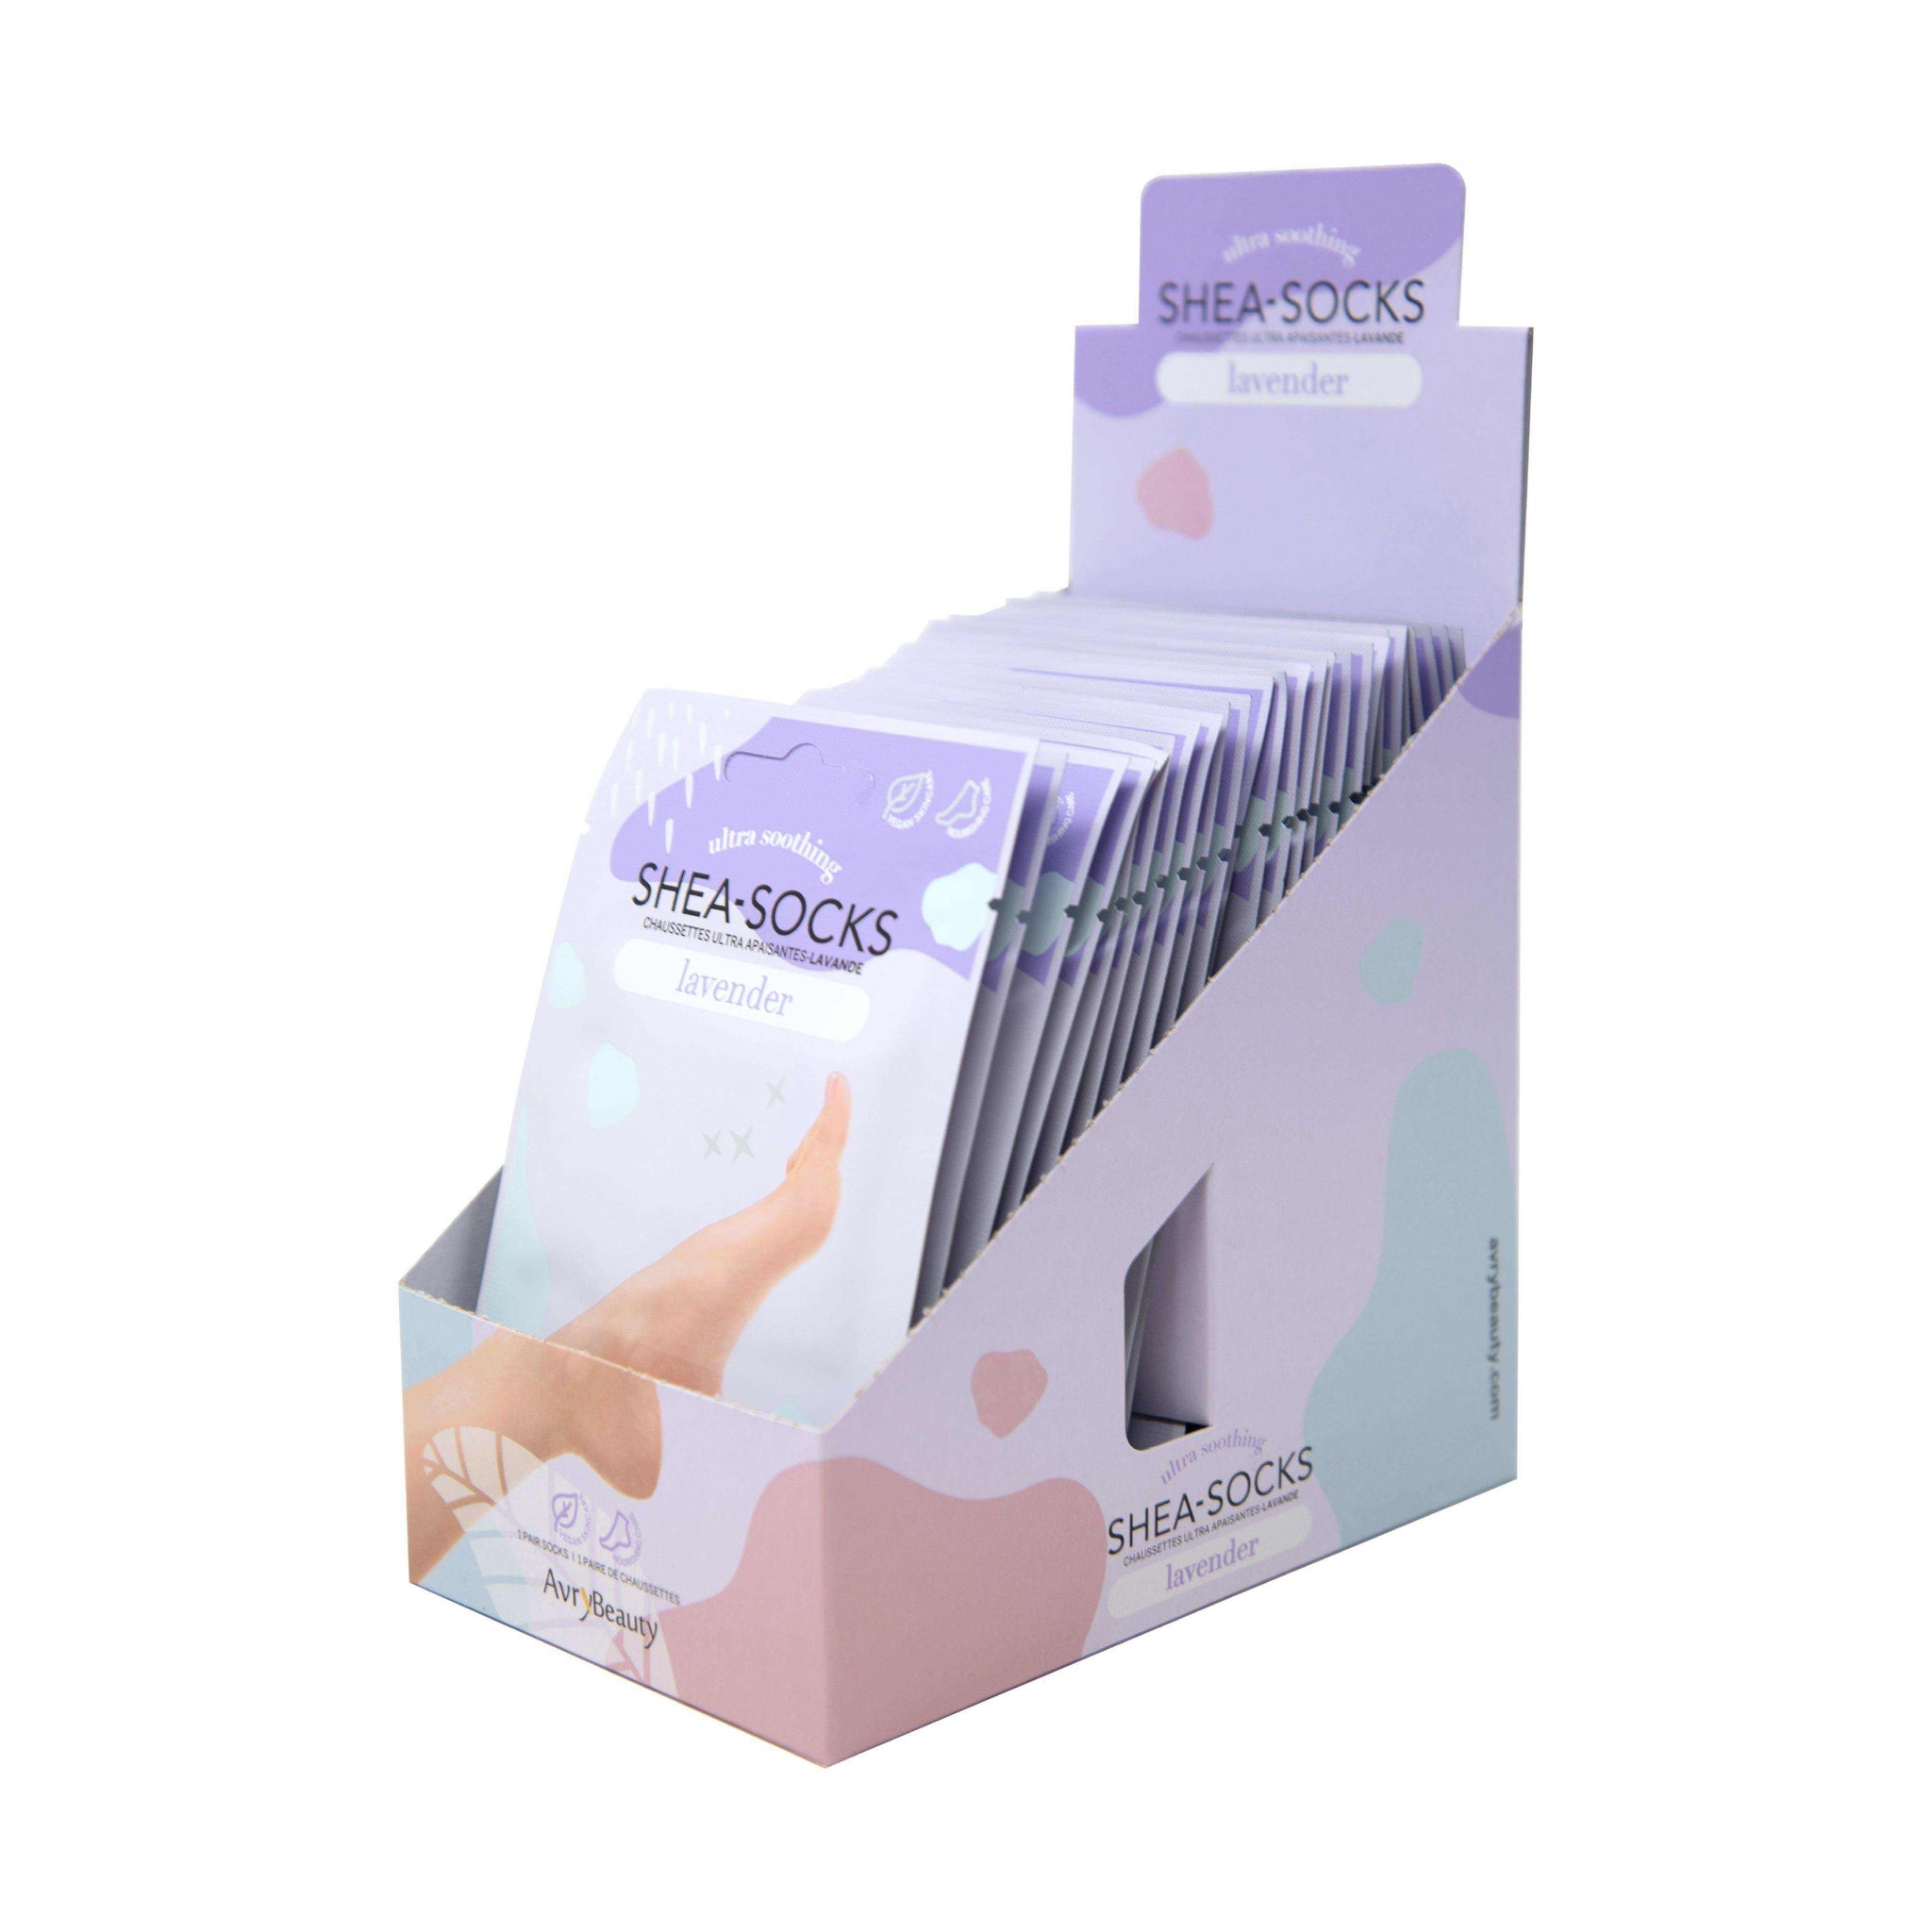 Avry Beauty Shea Socks - Lavender 50pc